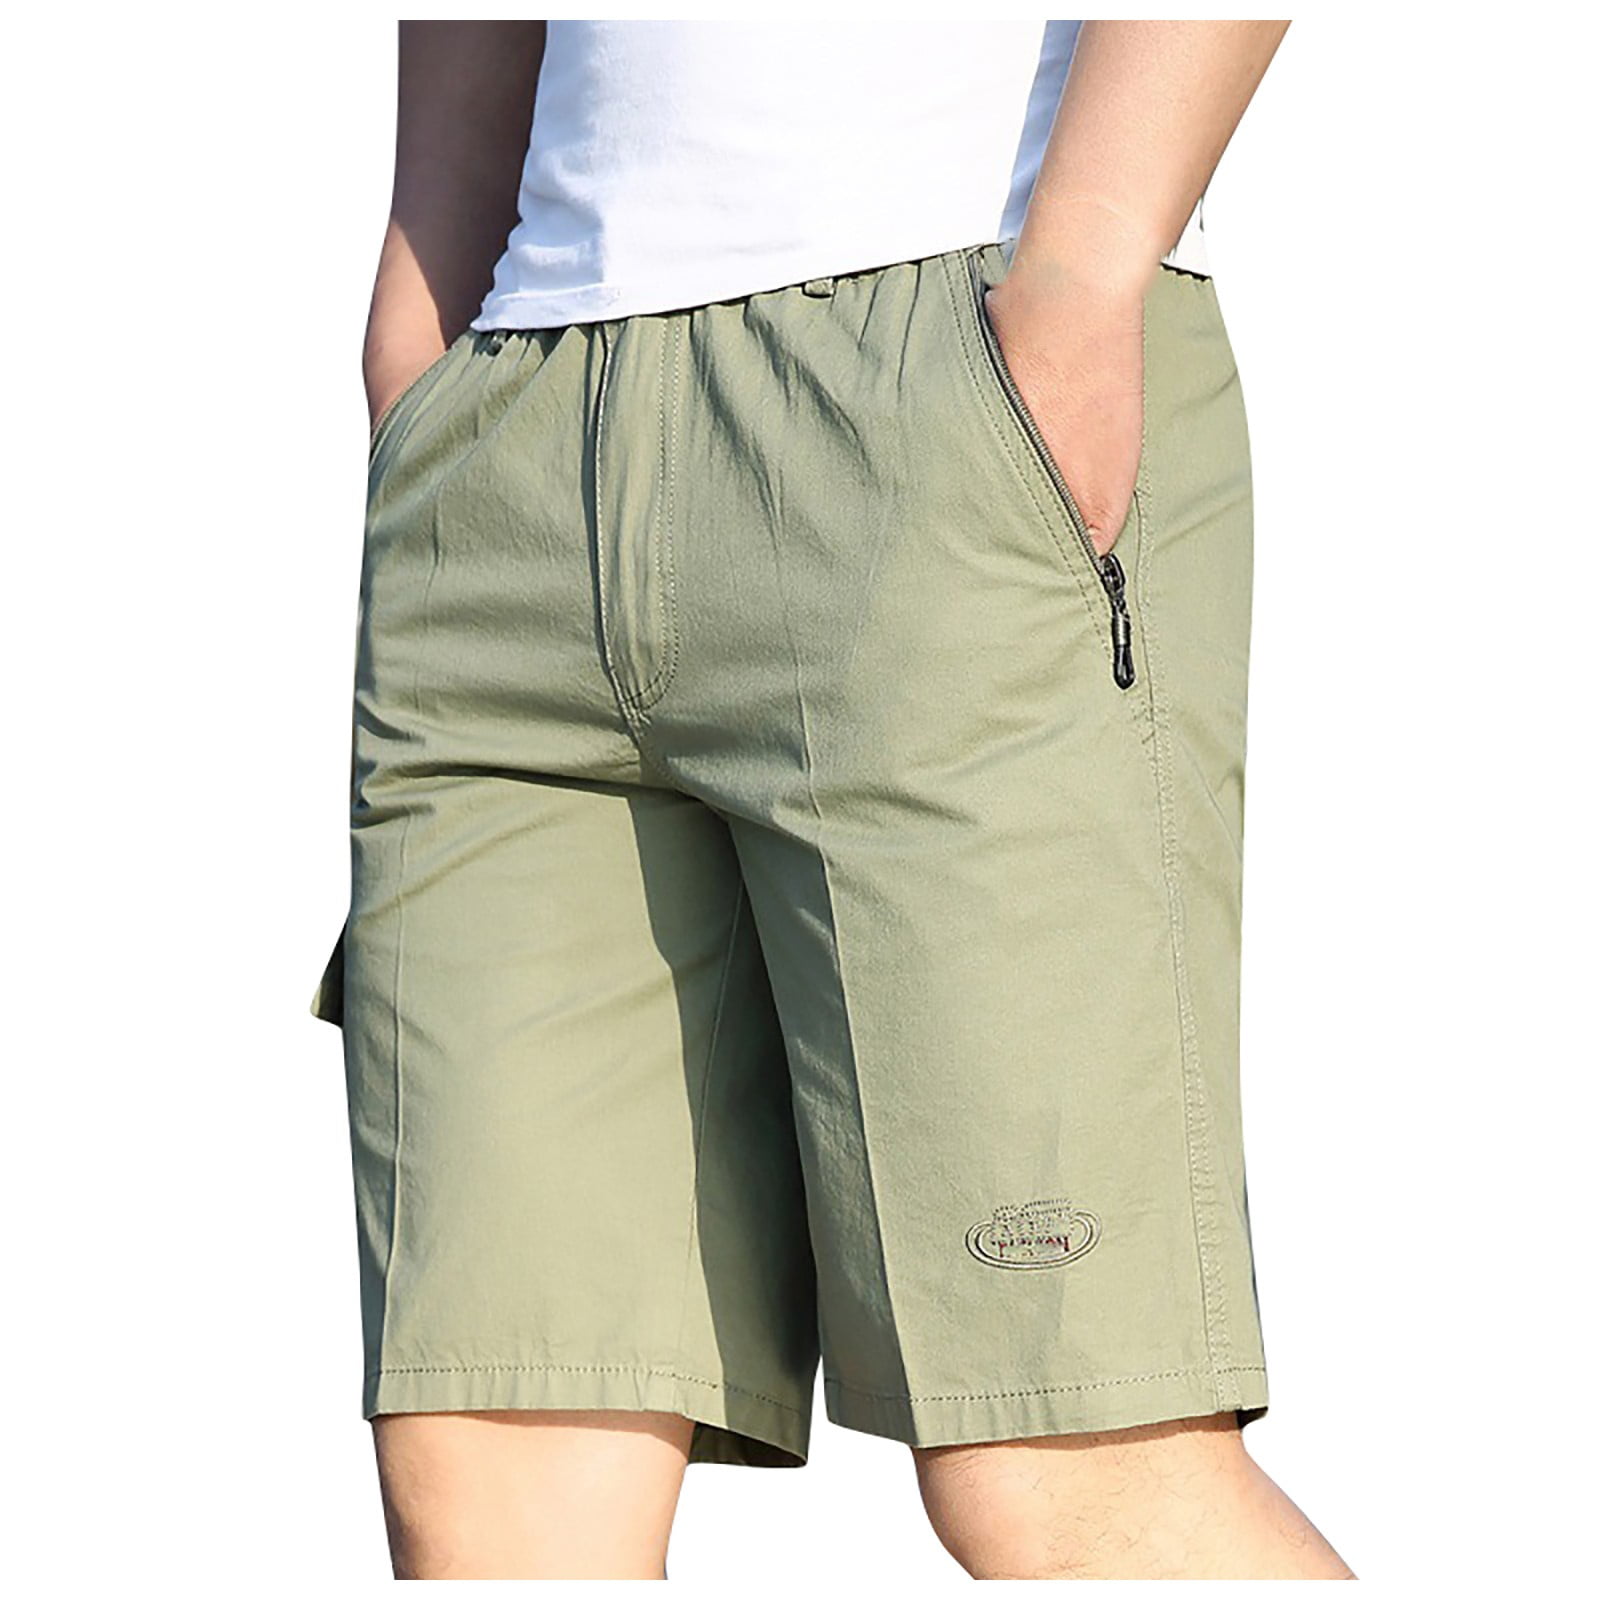 KIJBLAE Men's Short Pants Elastic Waist Comfy Lounge Casual Soft